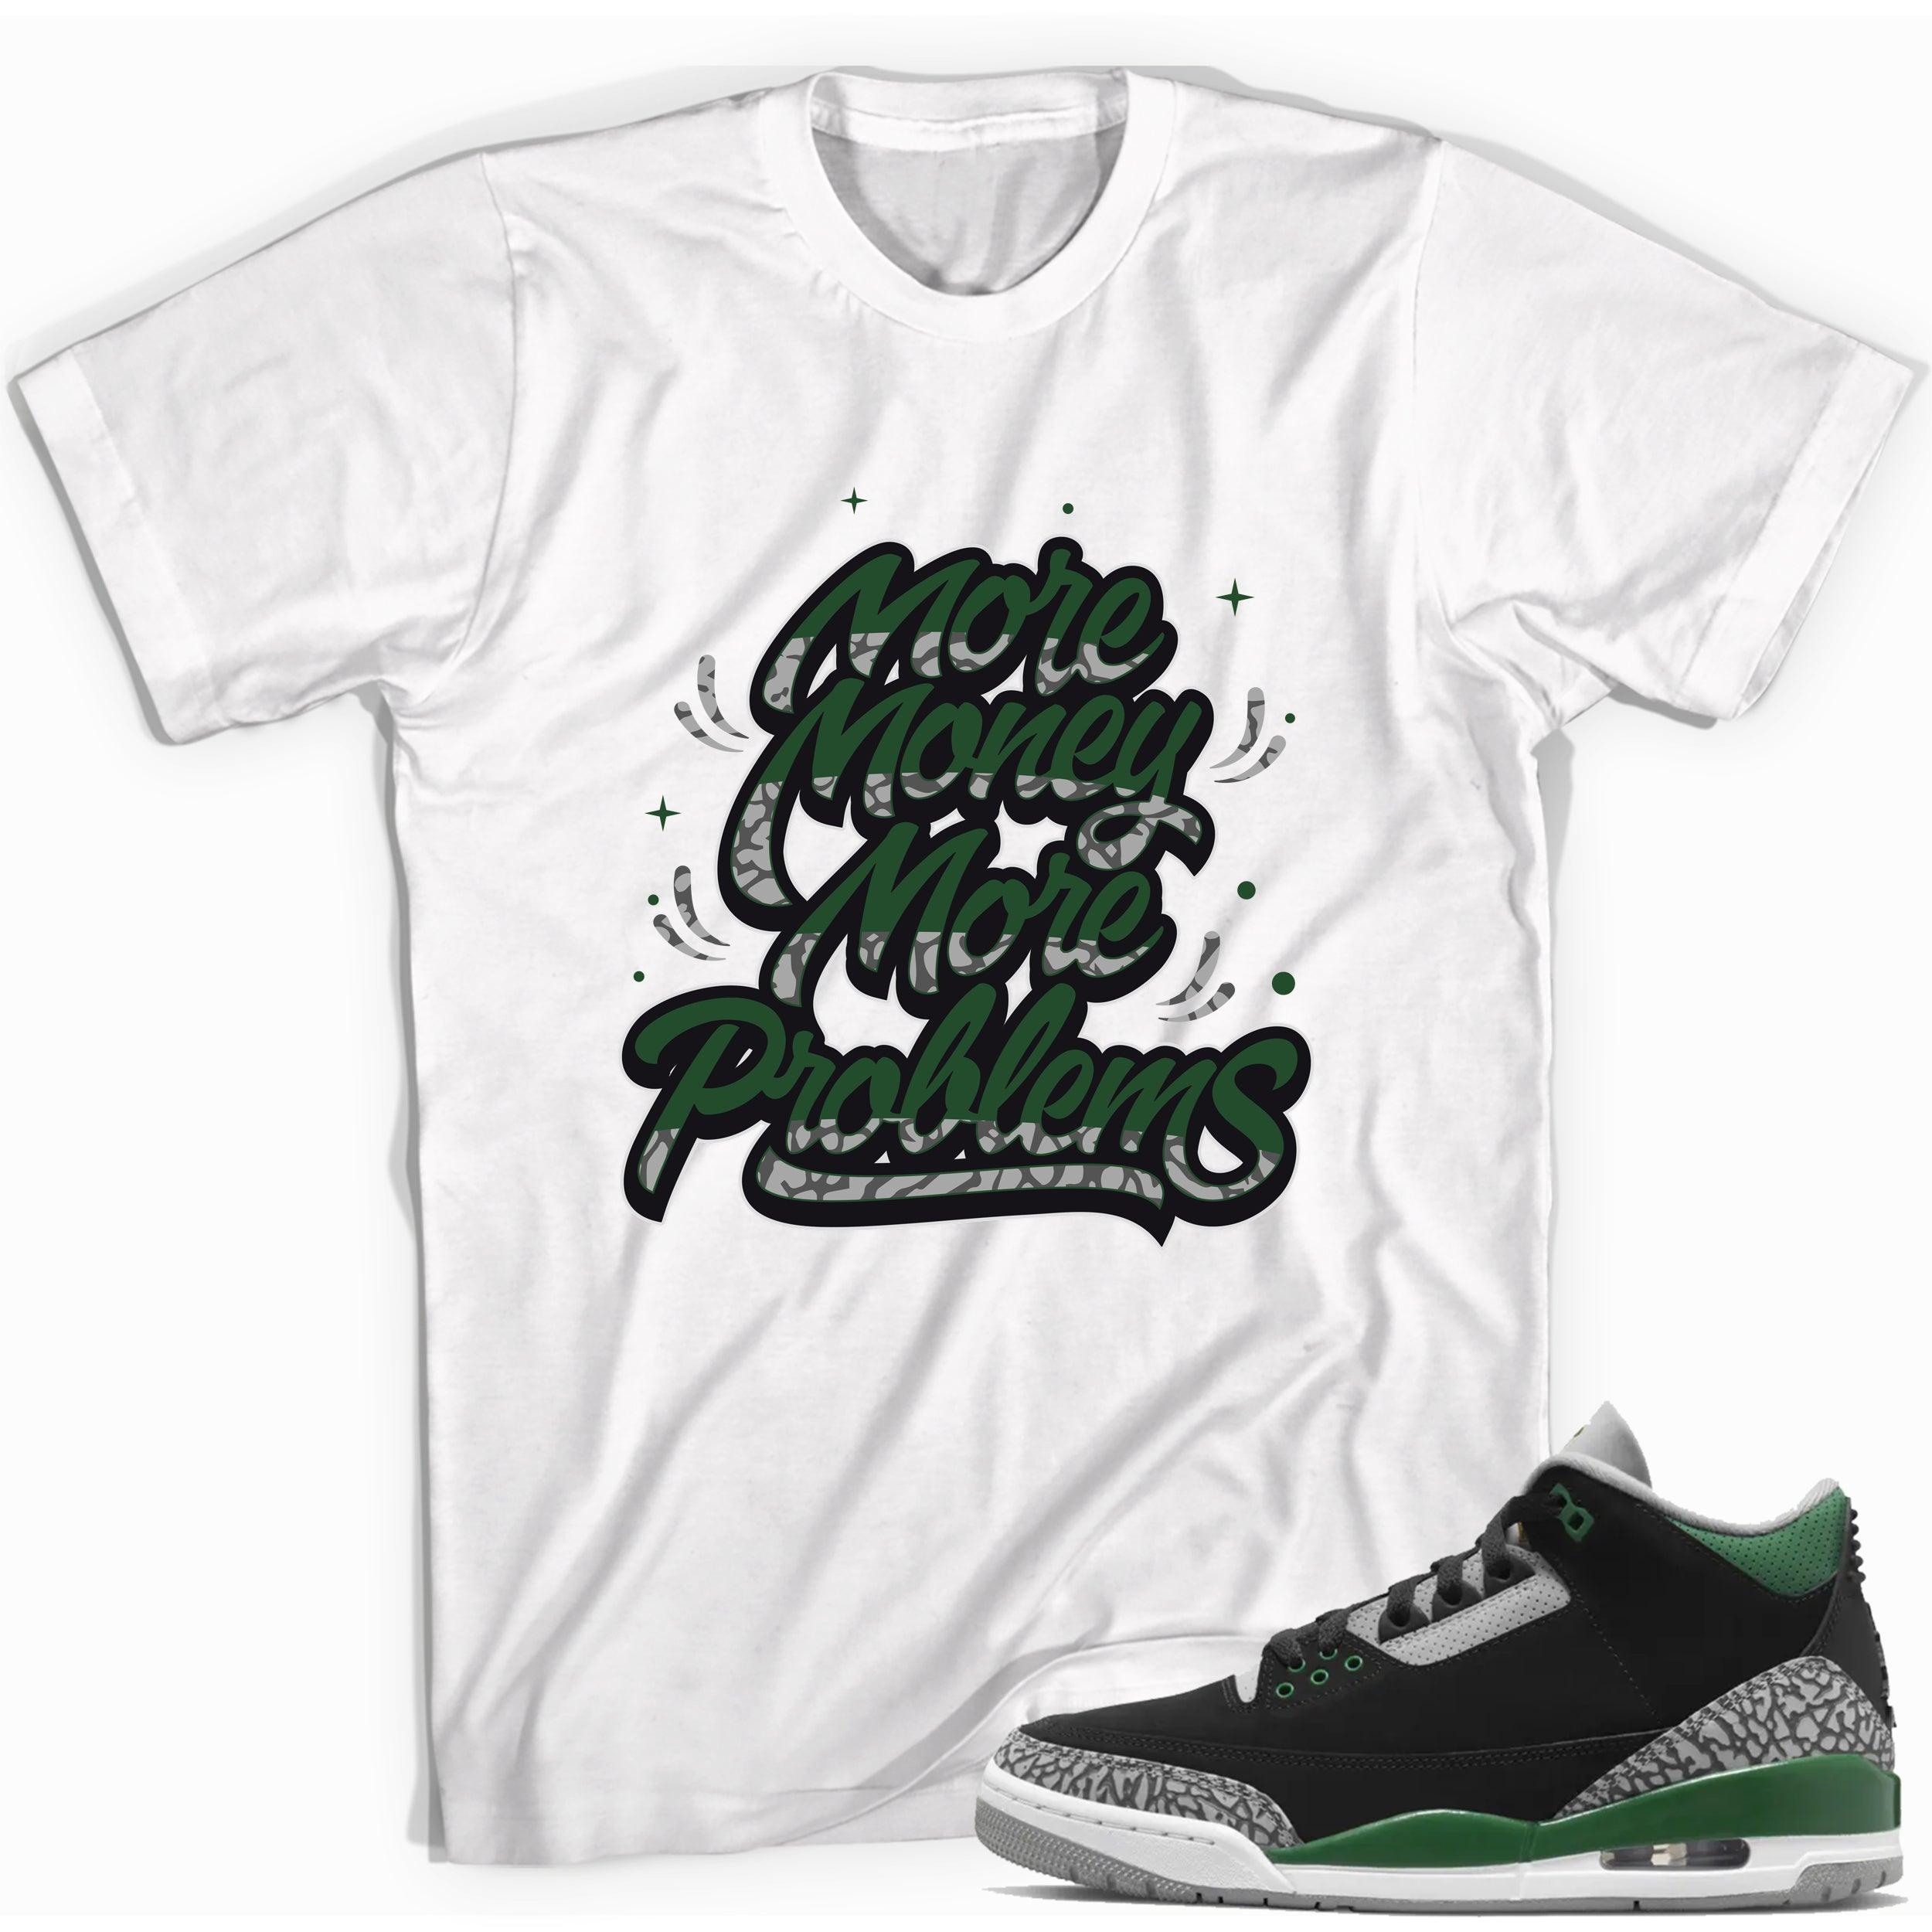 More Money More Problems Shirt Jordan 3s Pine Green photo